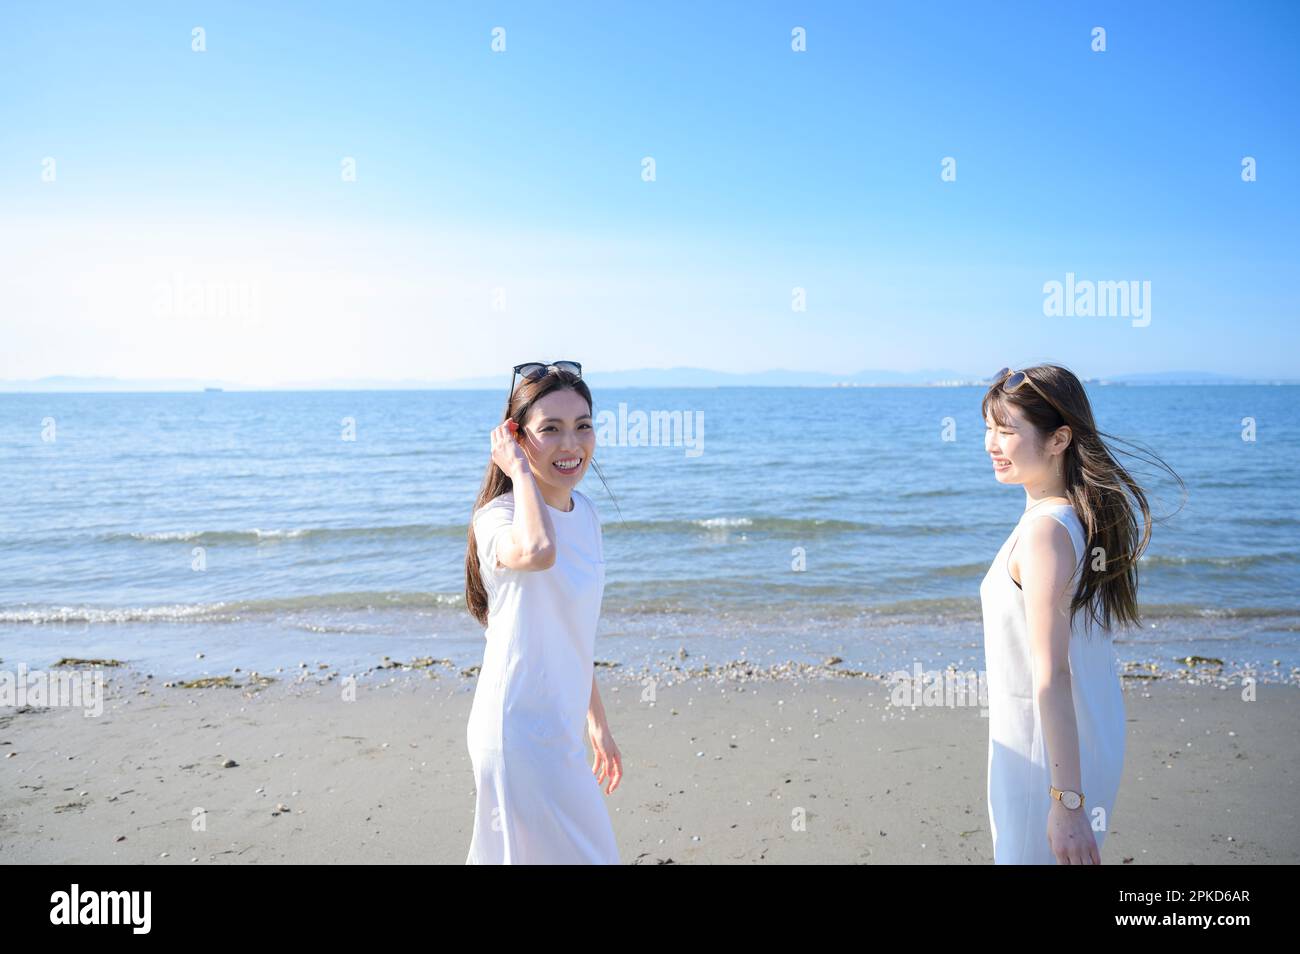 Two women walking on the beach Stock Photo